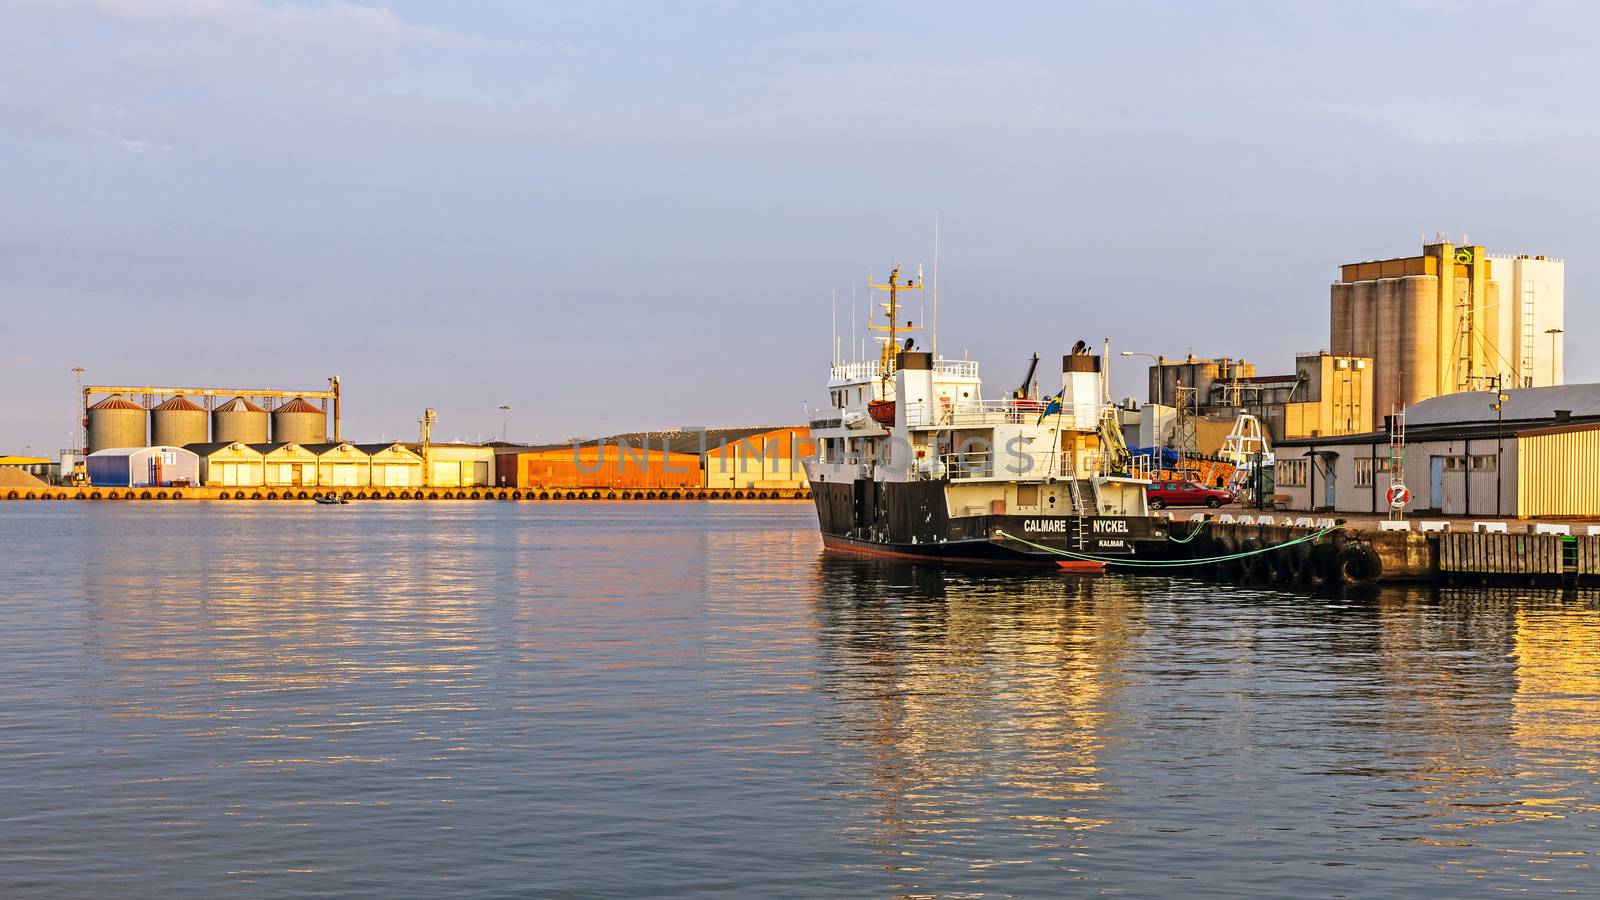 Ship moored in the Port of Kalmar by pawel_szczepanski